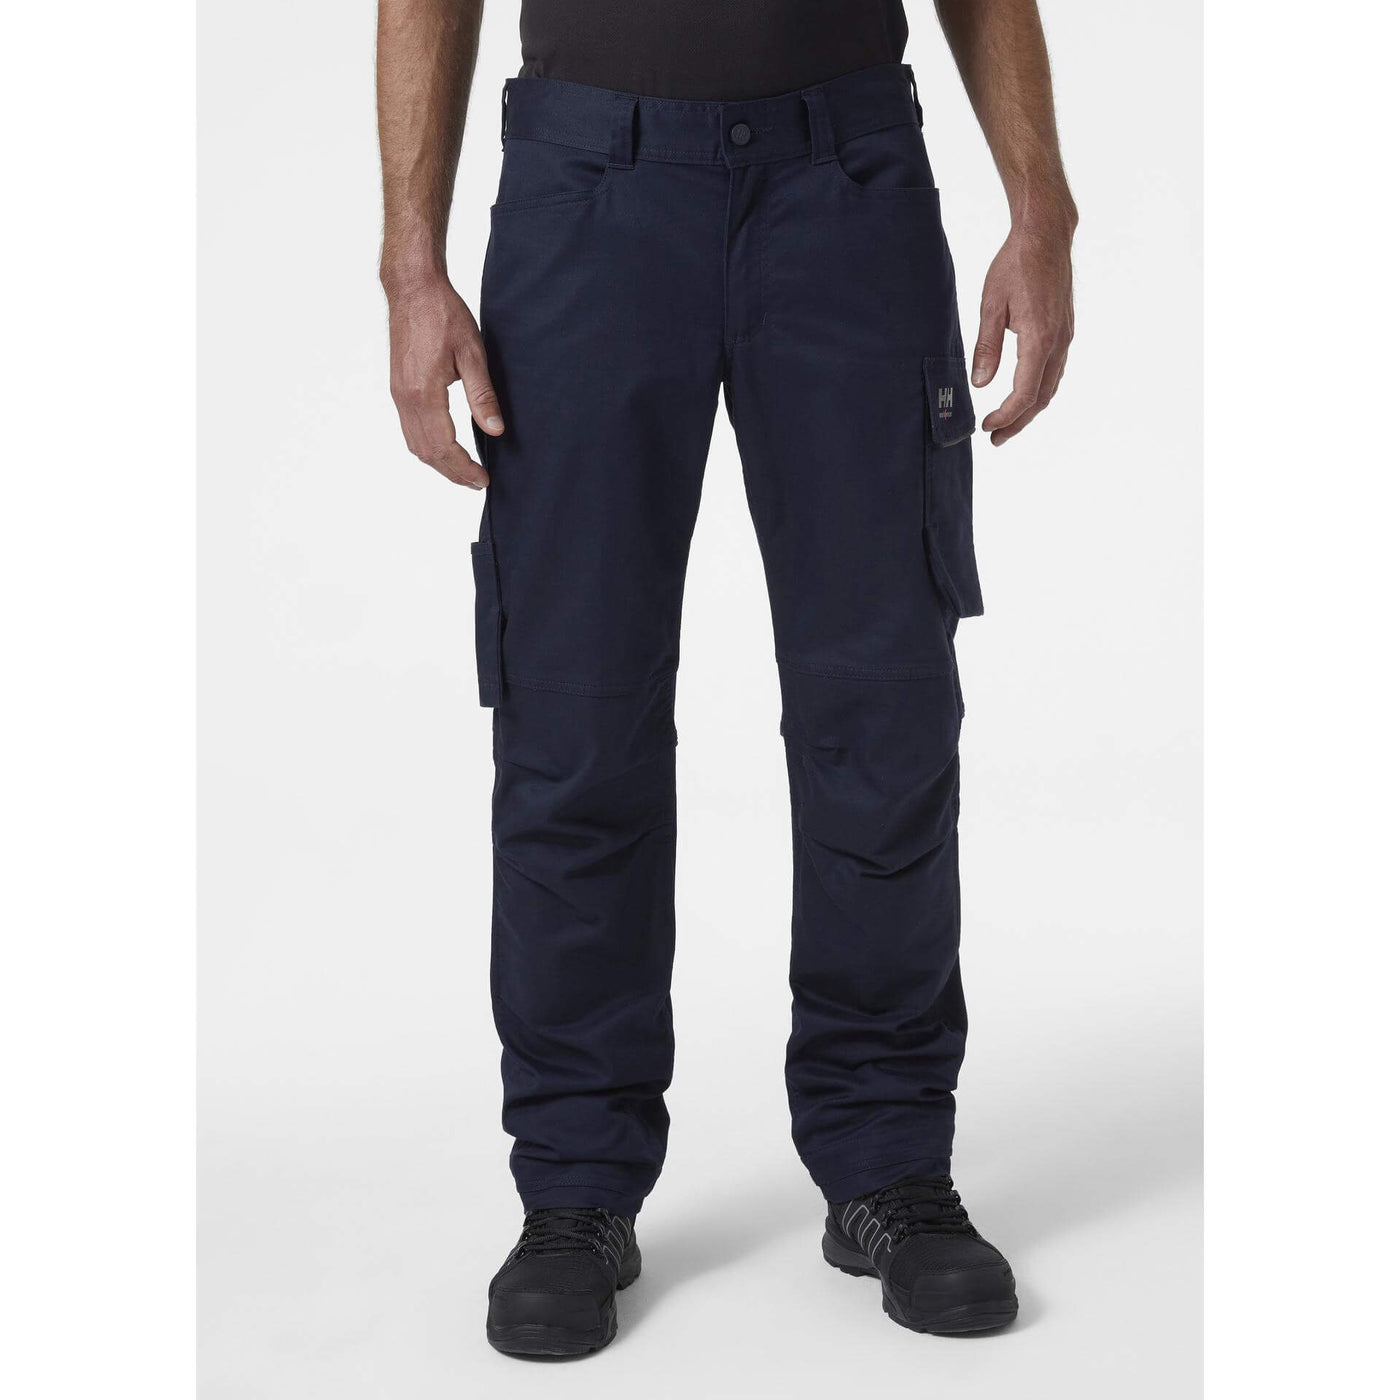 DEWALT ProTradesman Men's 40 in. W x 31 in. L Black  Polyester/Cotton/Elastane Heavy-Duty Stretch Work Pant DXWW50023-BLK-40/31  - The Home Depot